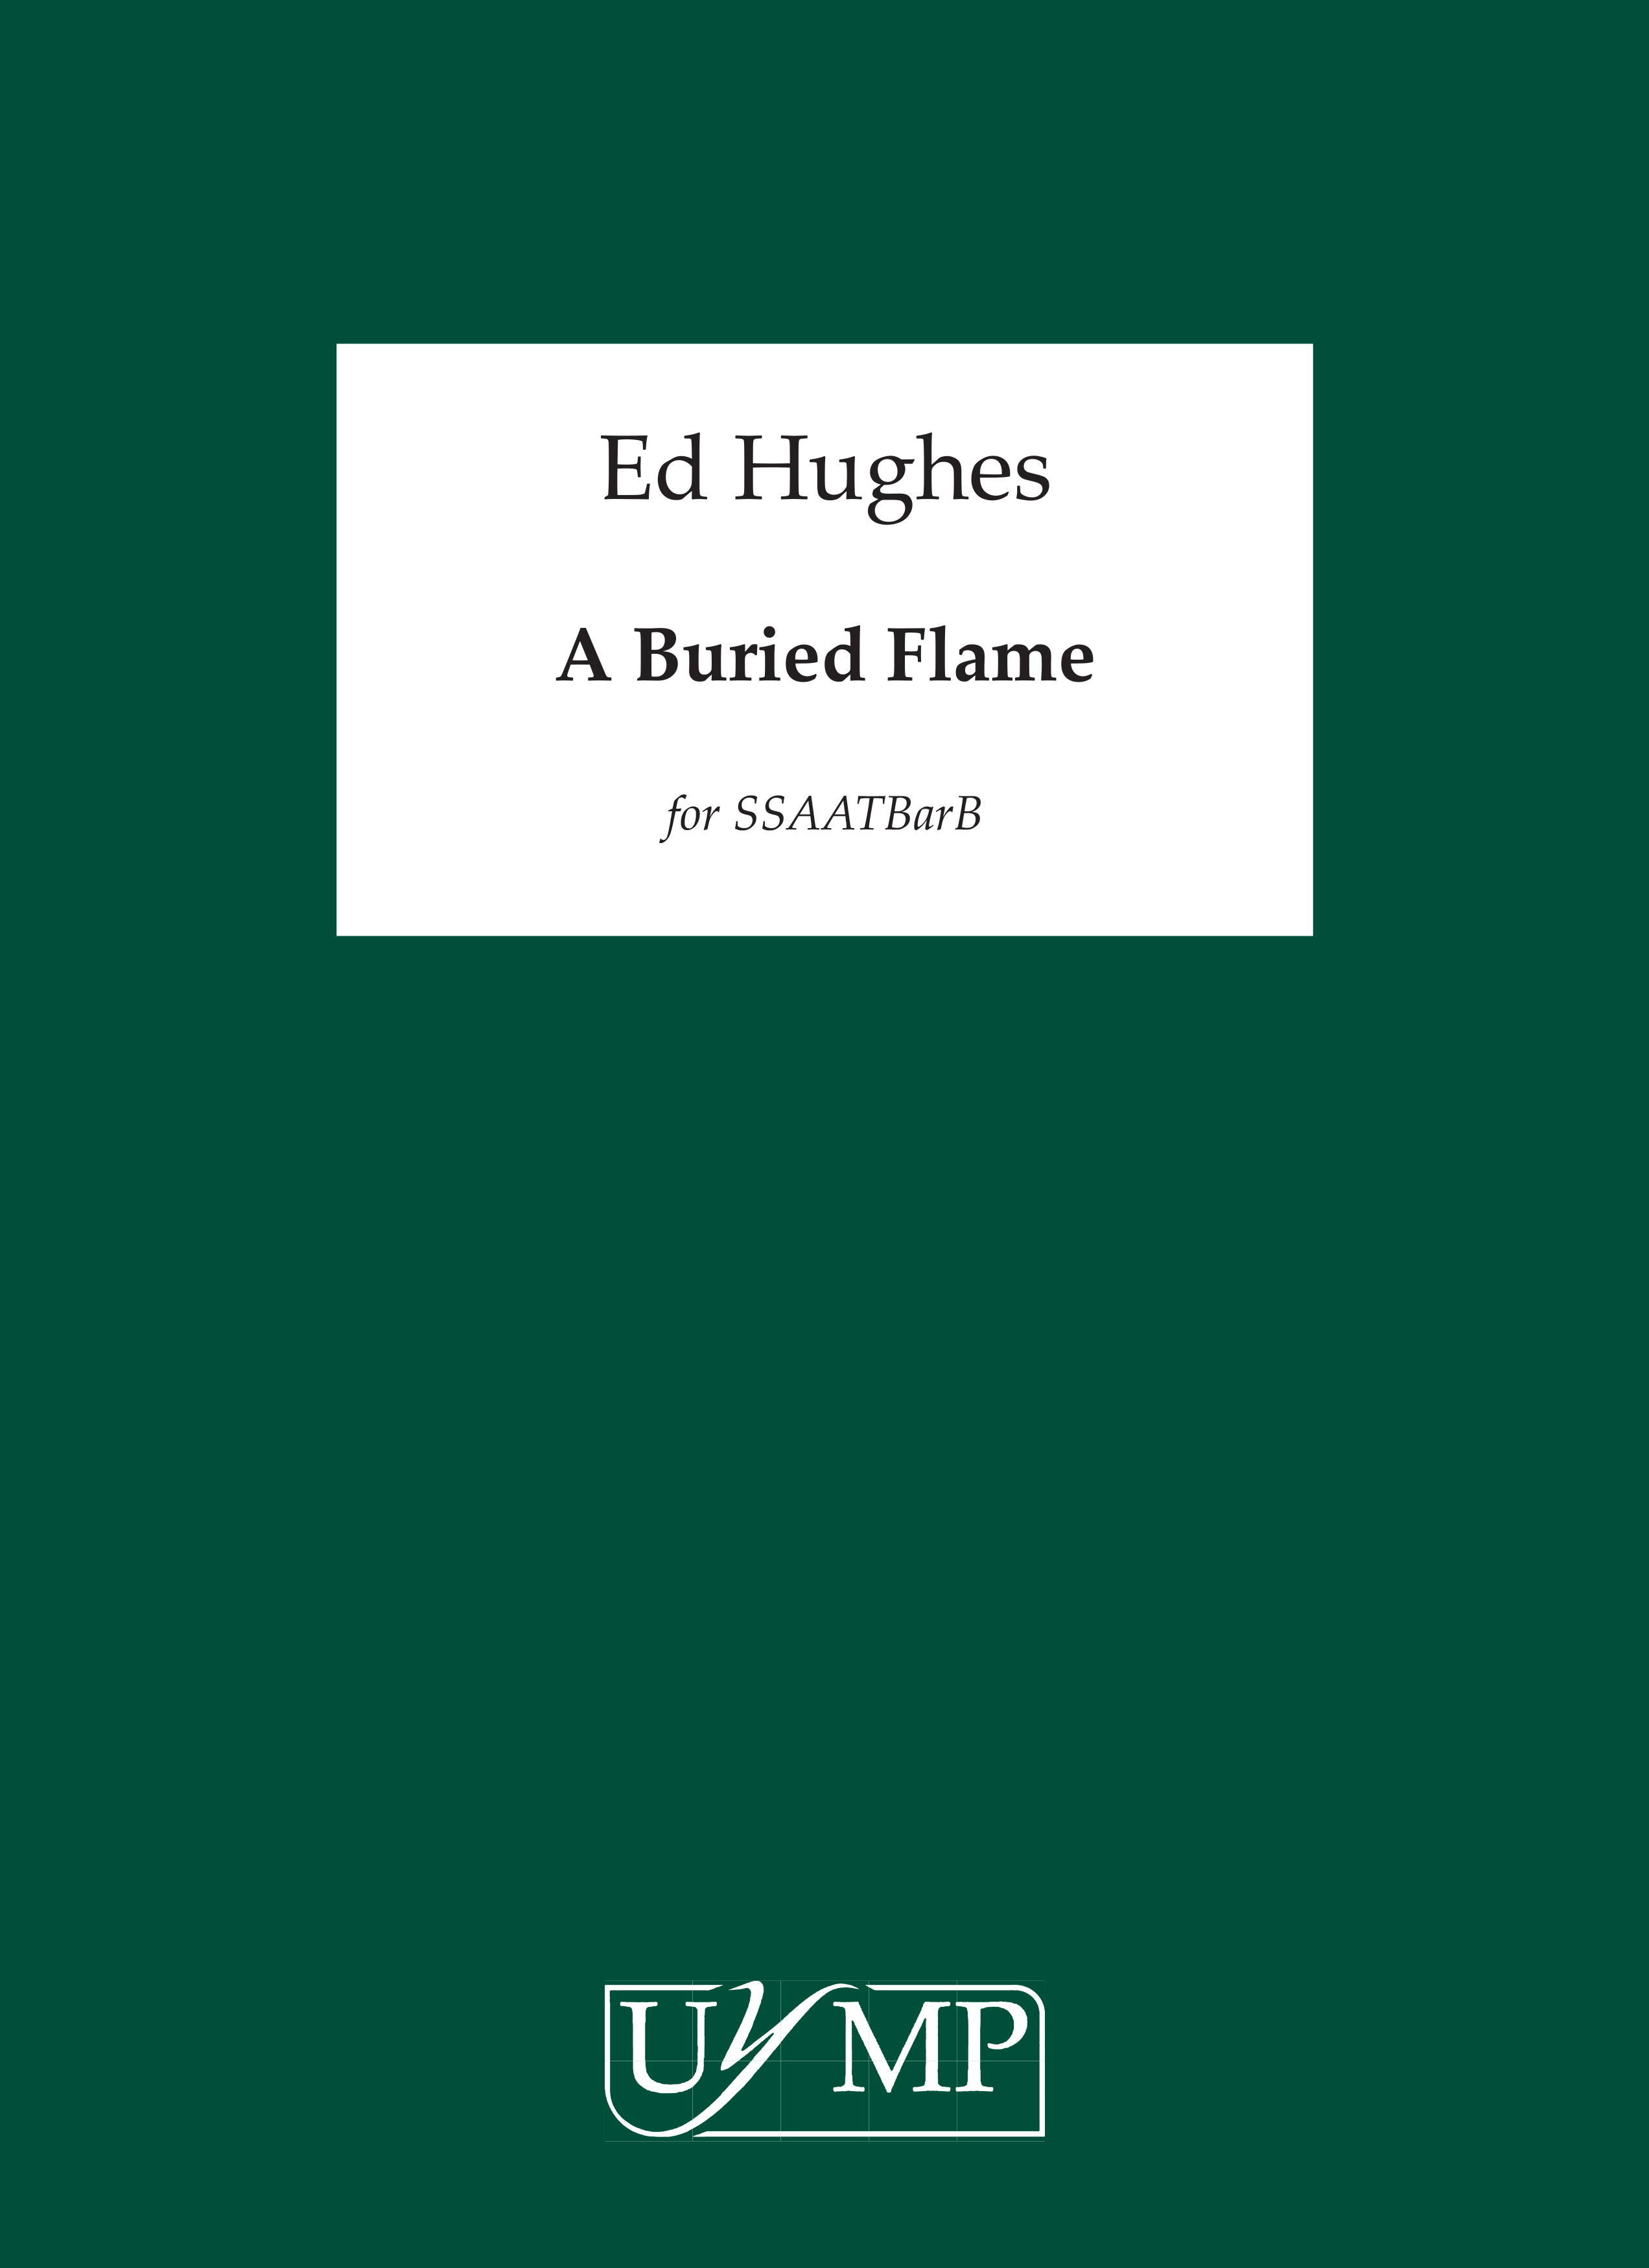 Ed Hughes: A Buried Flame